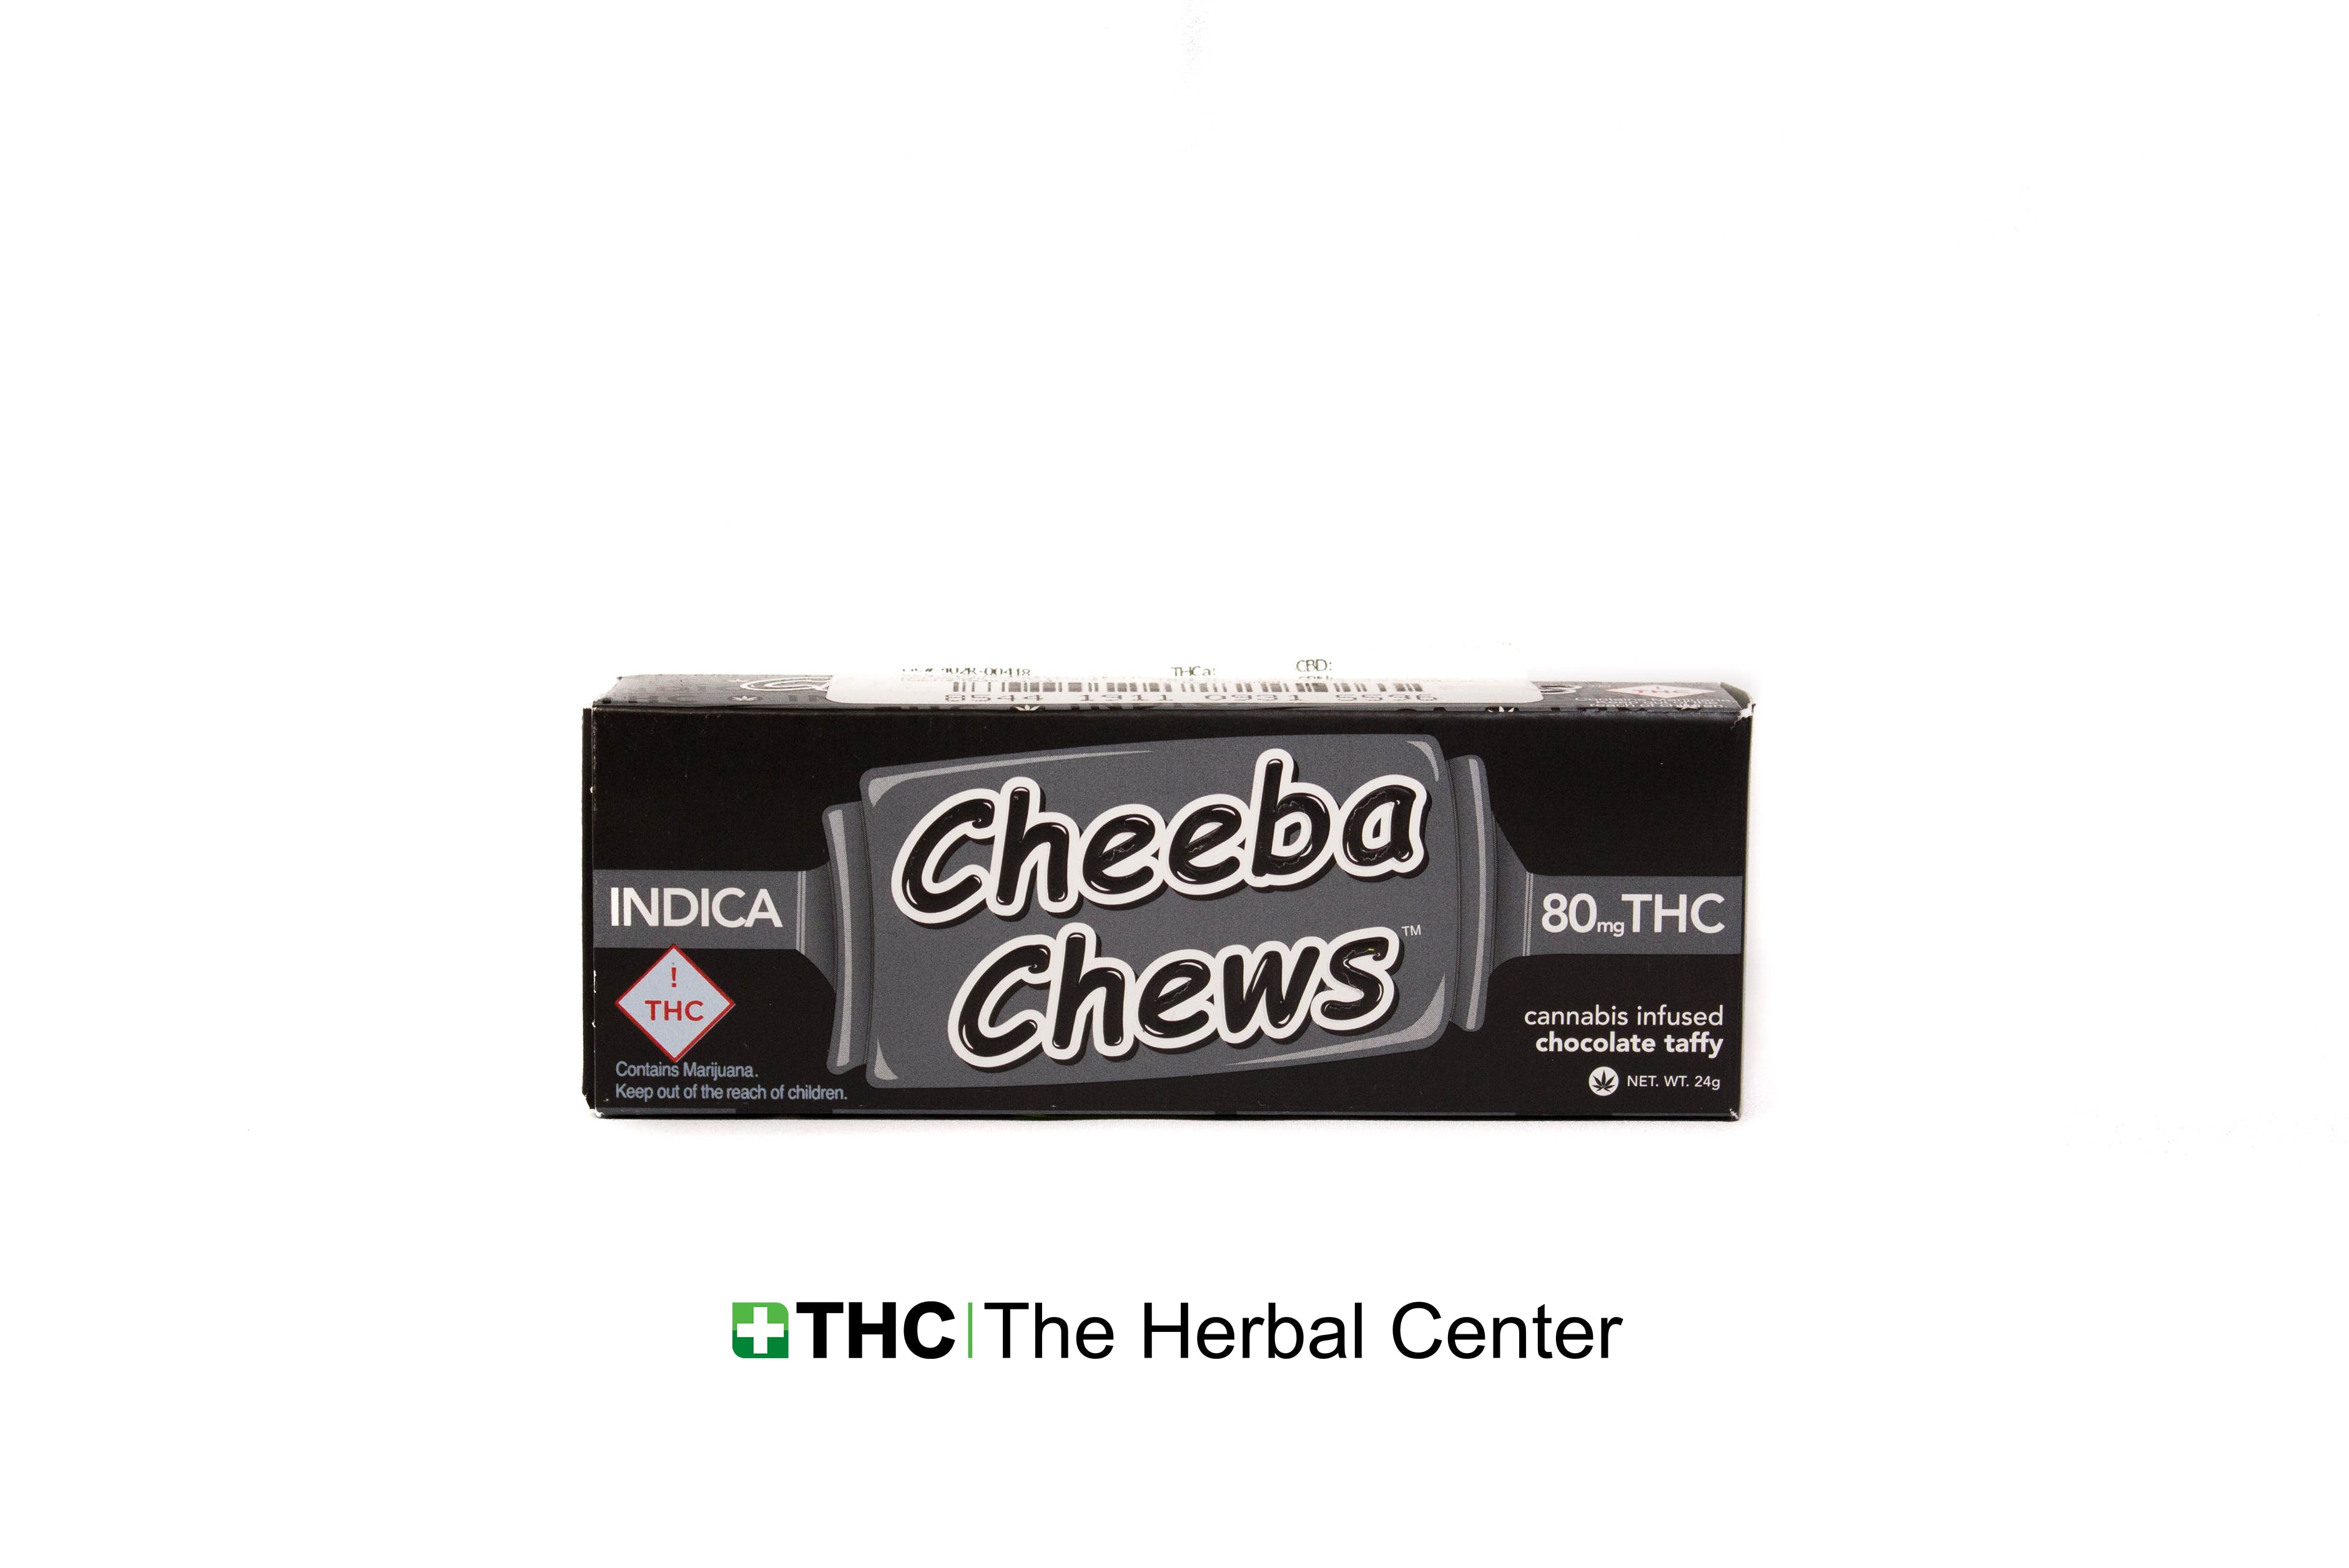 marijuana-dispensaries-the-herbal-center-broadway-rec-in-denver-cheeba-chew-indica-80mg